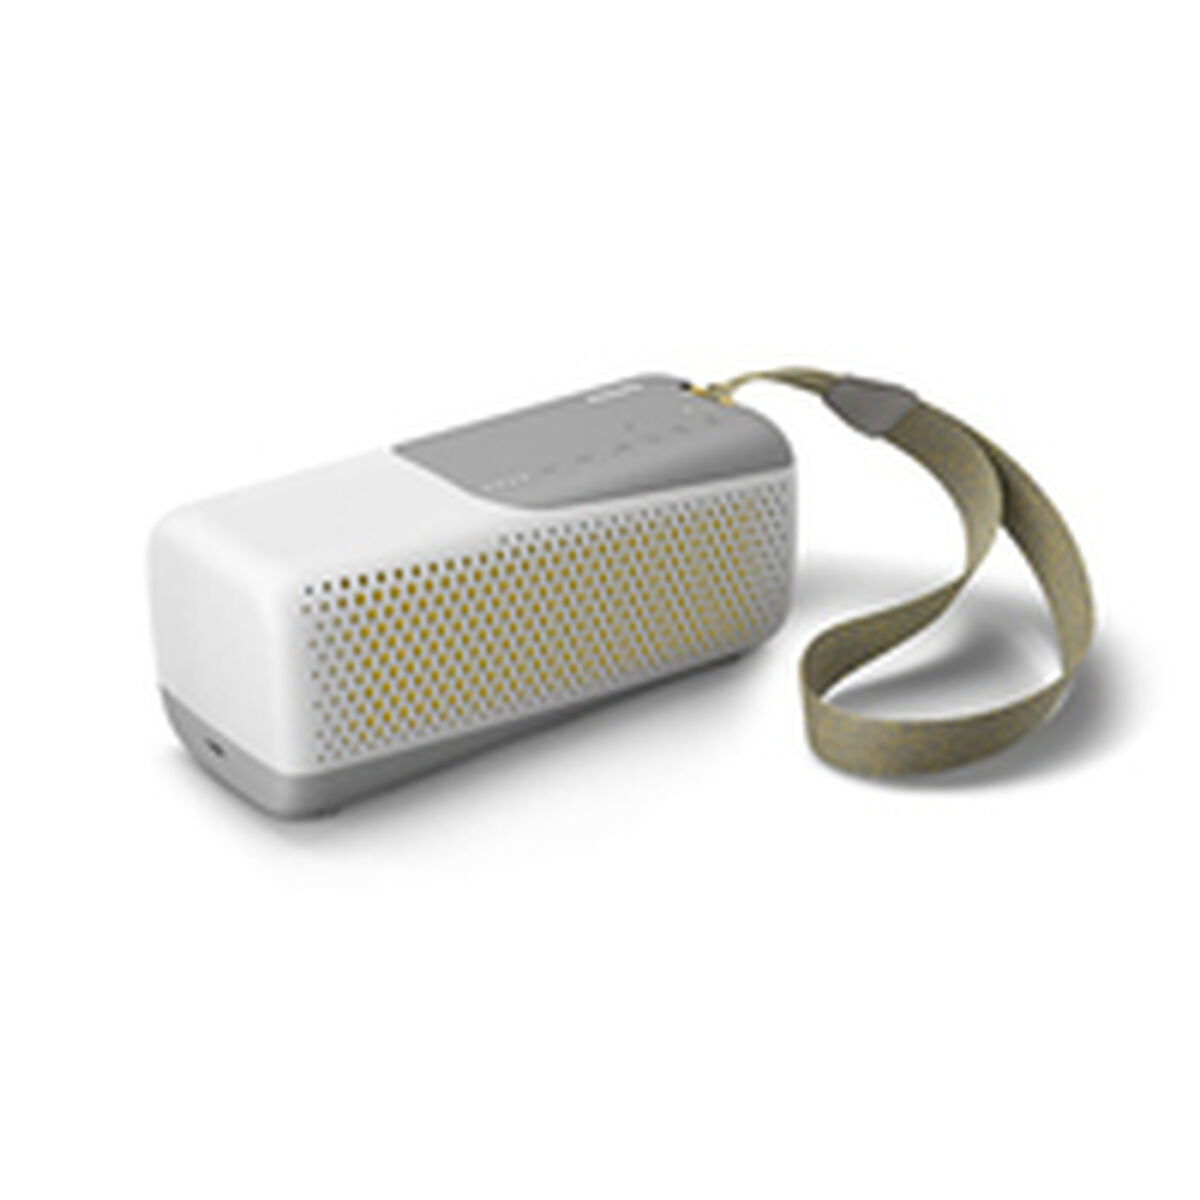 Tragbare Bluetooth -Lautsprecher Philips Wireless Sprecher White